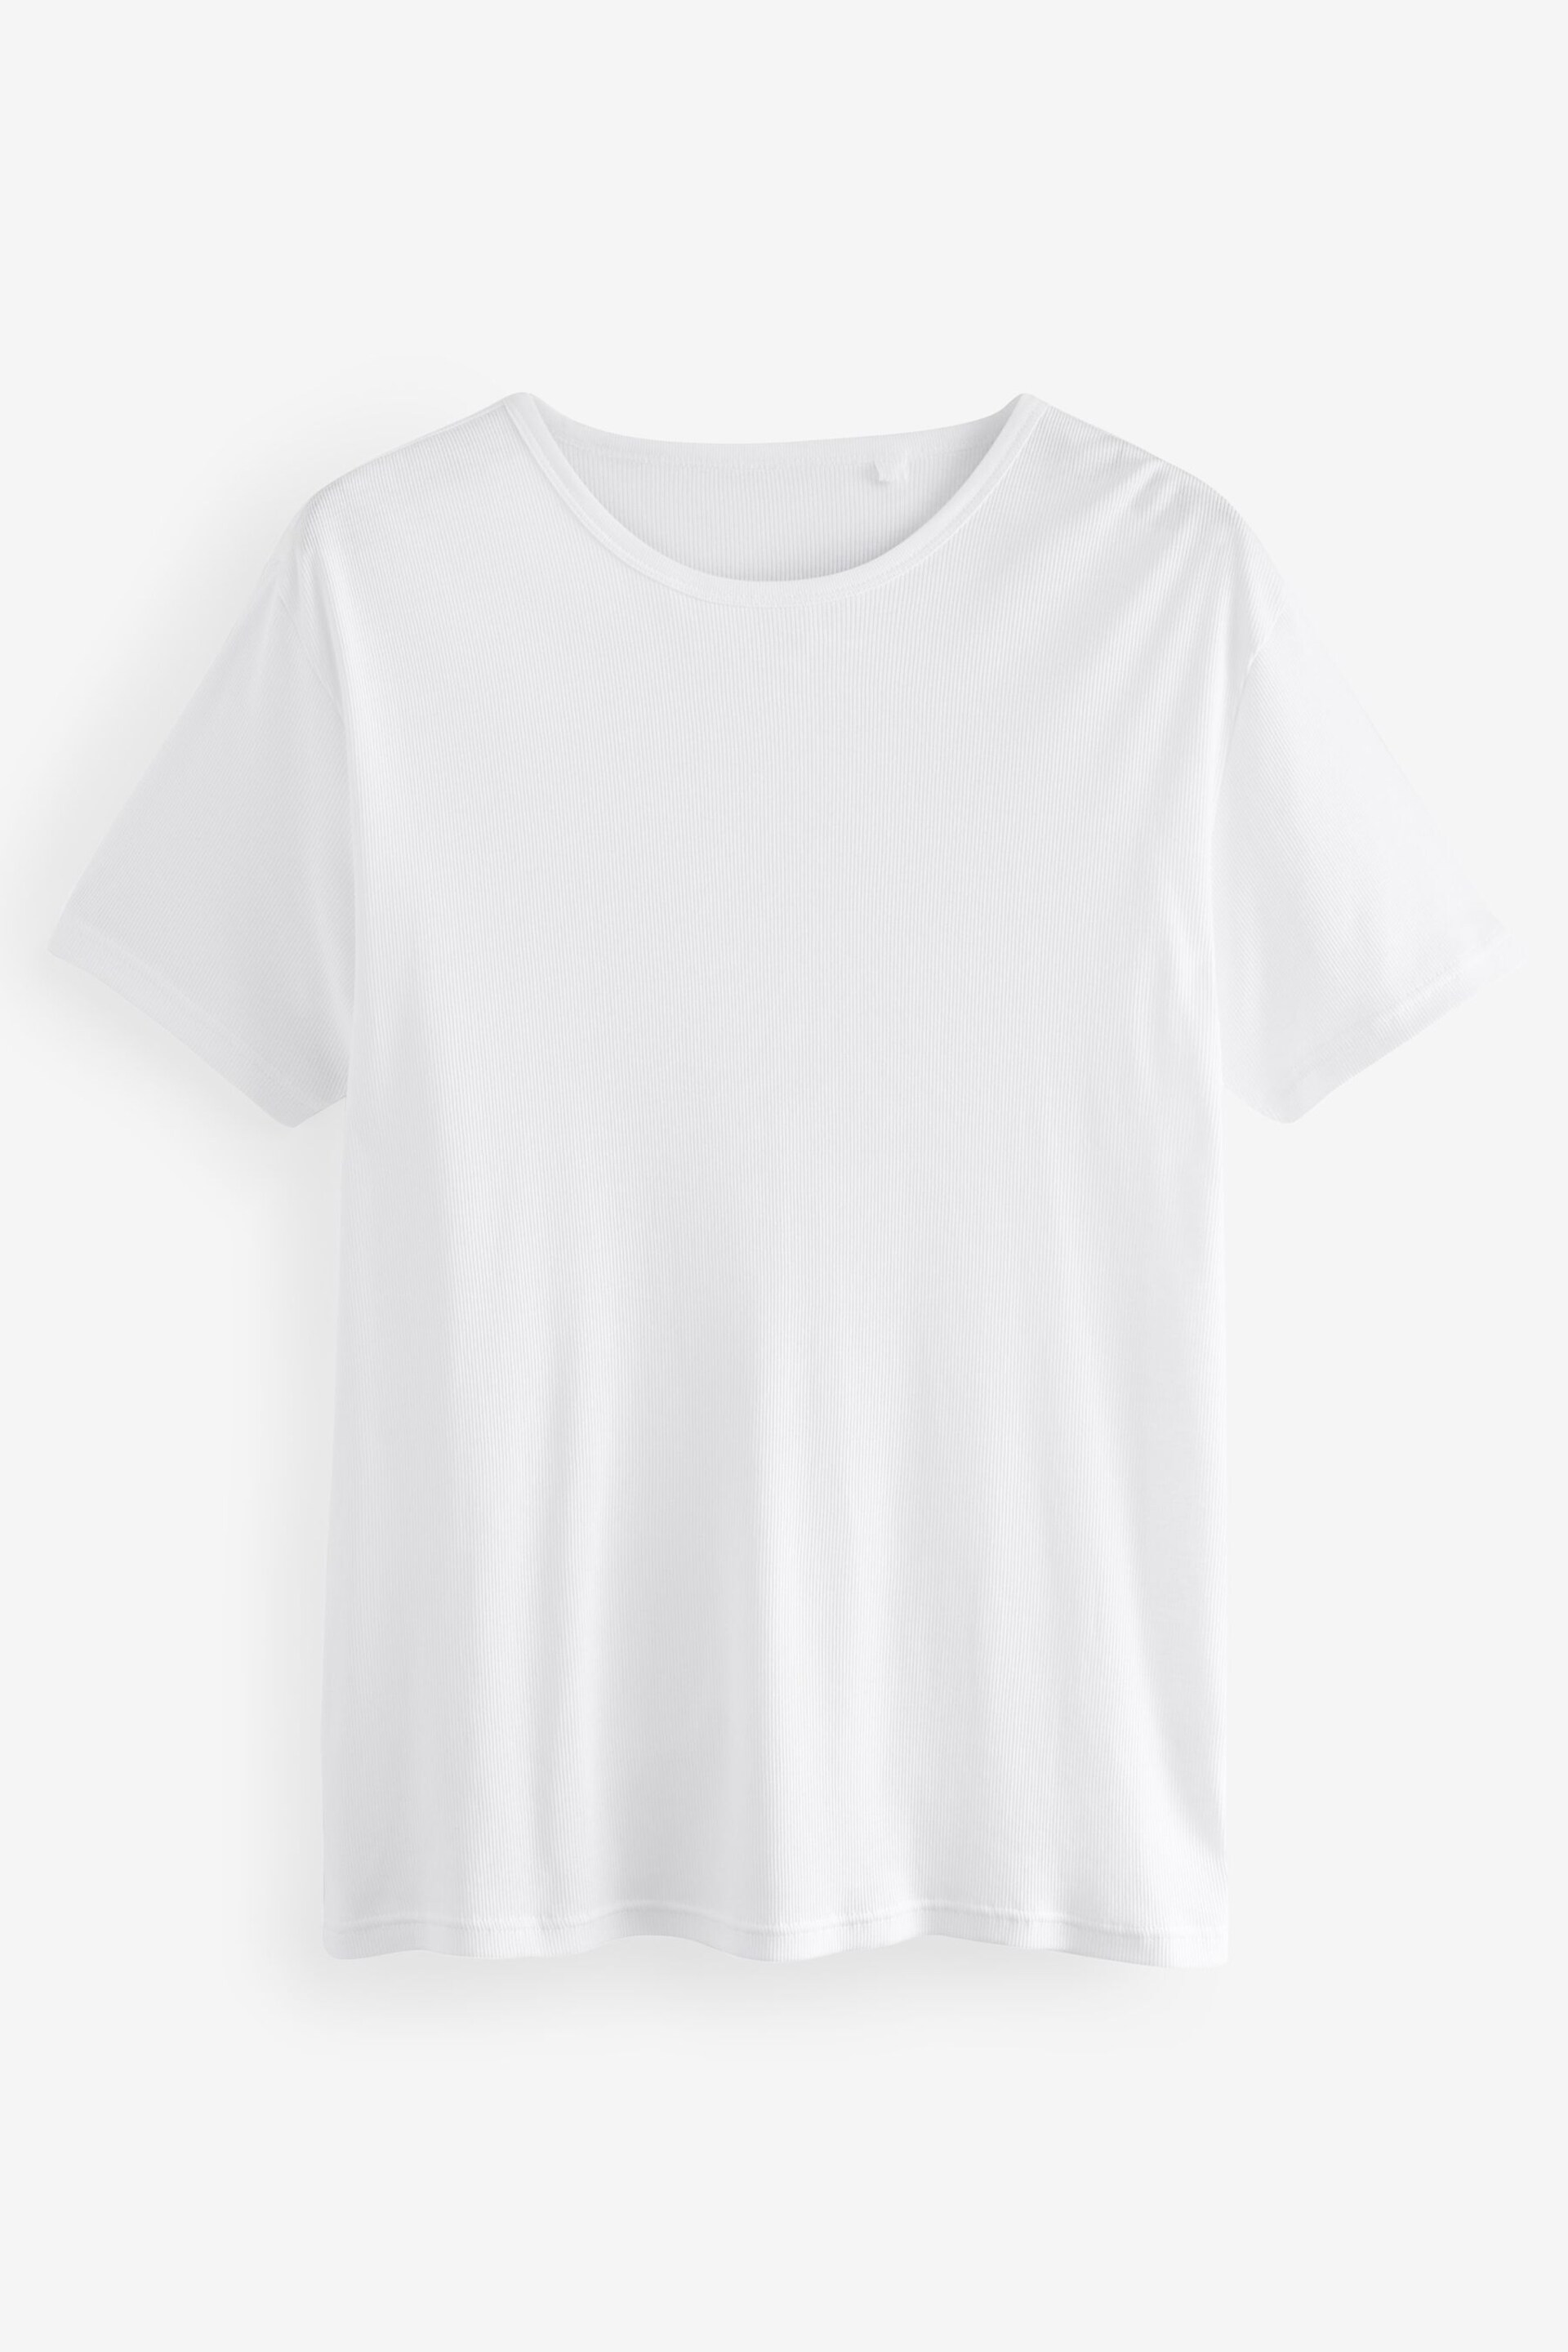 White Rib Slim Fit T-Shirts 5 Pack - Image 2 of 8